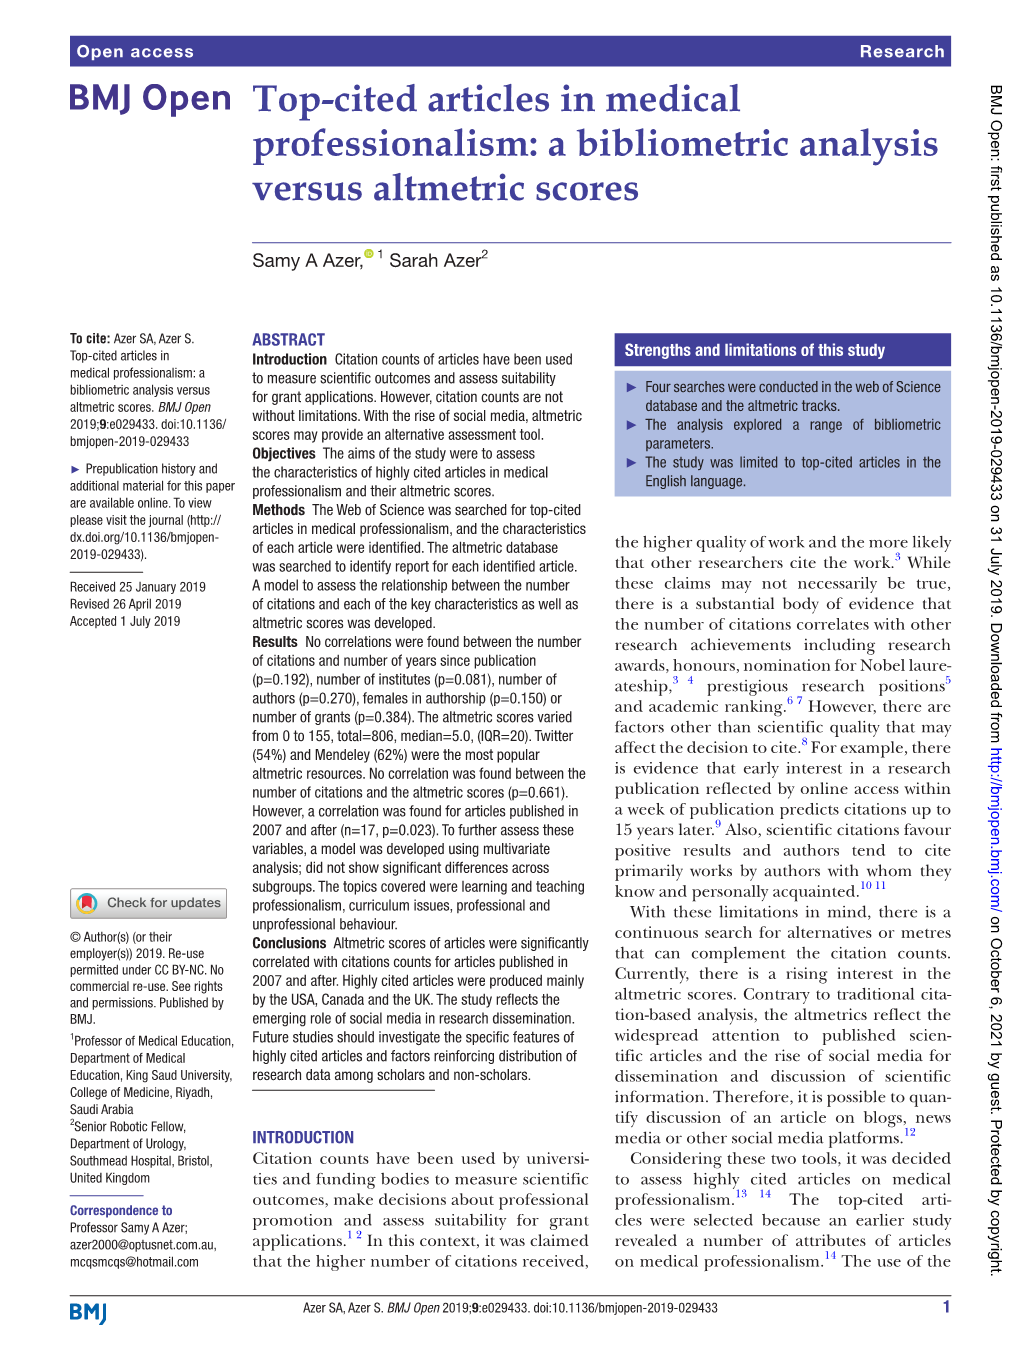 Top-Cited Articles in Medical Professionalism: a Bibliometric Analysis Versus Altmetric Scores